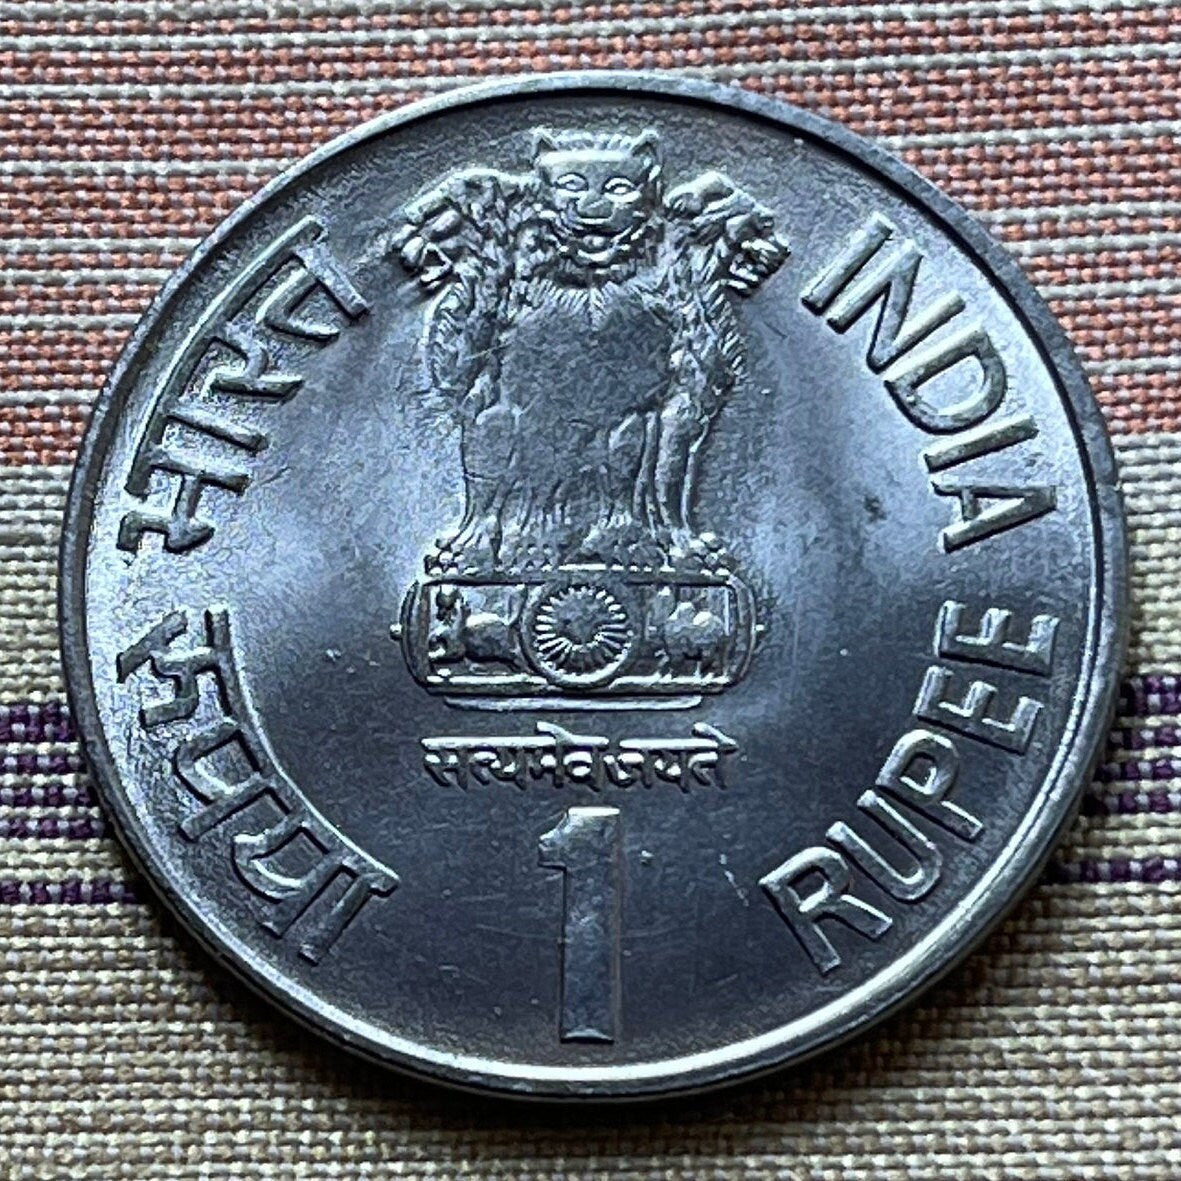 Maharana Pratap & Ashoka Lion Capitol 1 Rupee India Rajasthan Authentic Coin Money for Jewelry and Craft Making (Pratap Singh I)